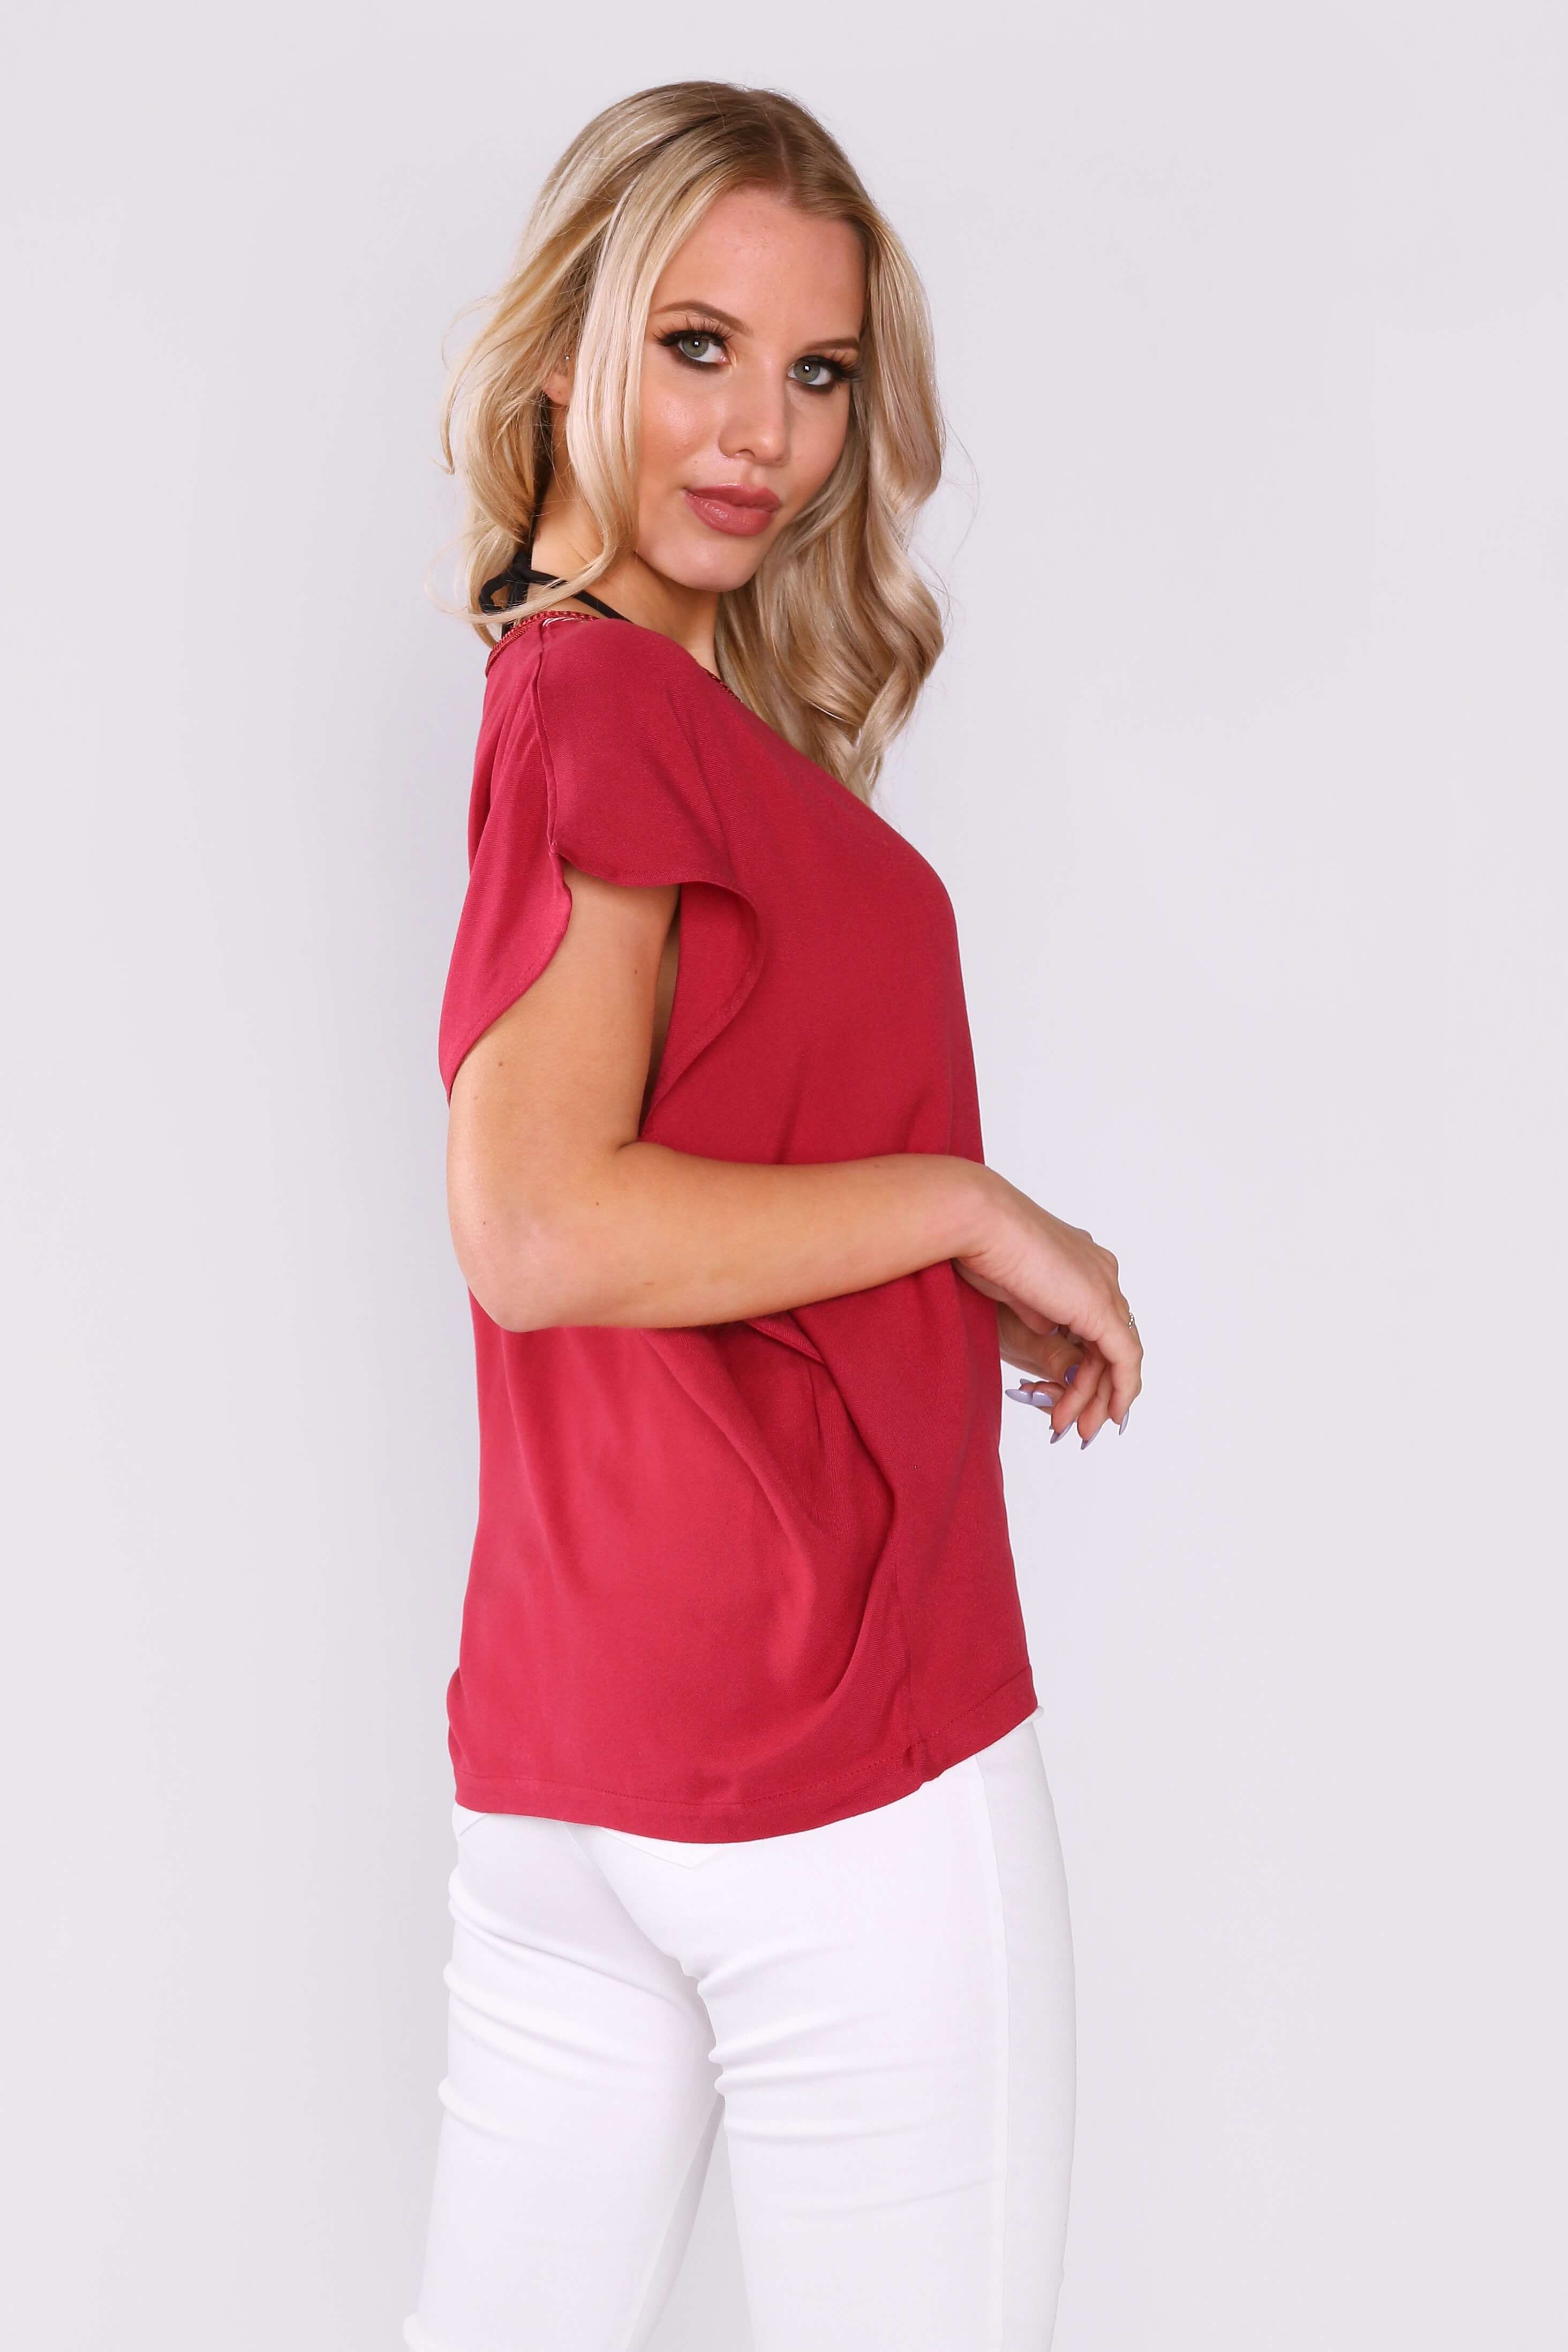 Sabah Short Sleeve V-Neck Embroidered Top in Raspberry